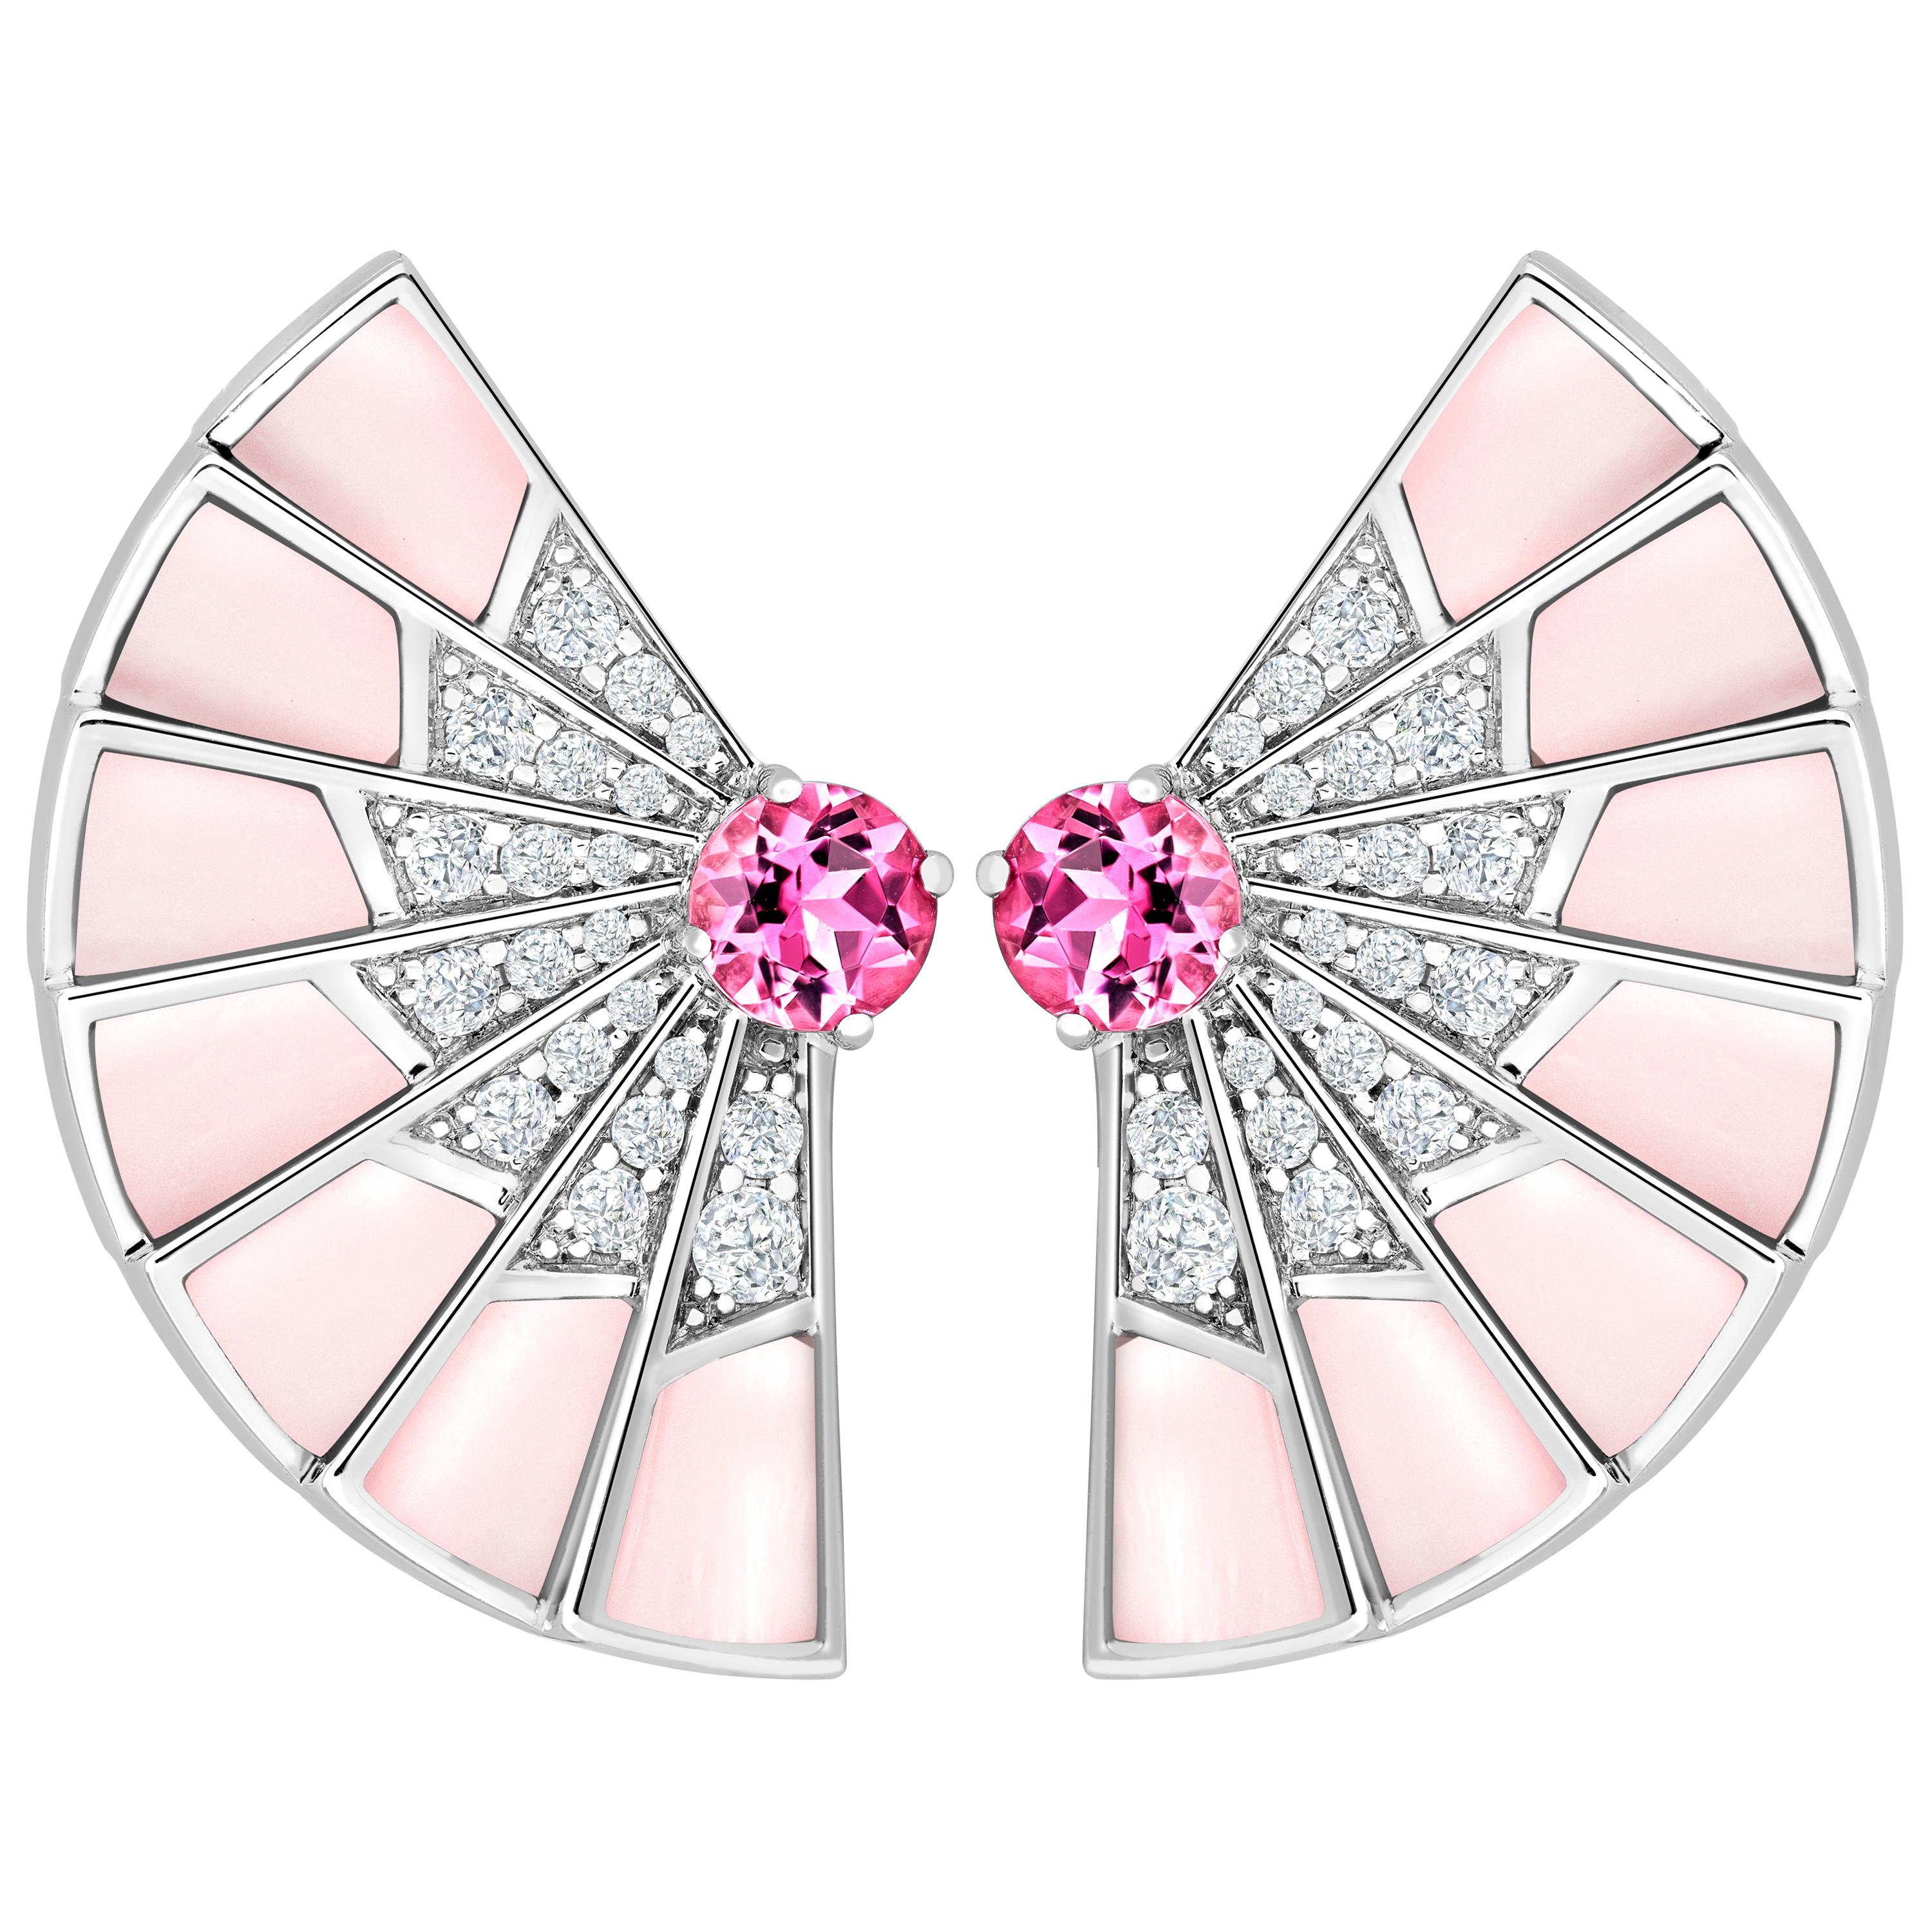 Garrard 'Fanfare Symphony' White Gold Diamond Pink Tourmaline Pink Opal Earrings For Sale